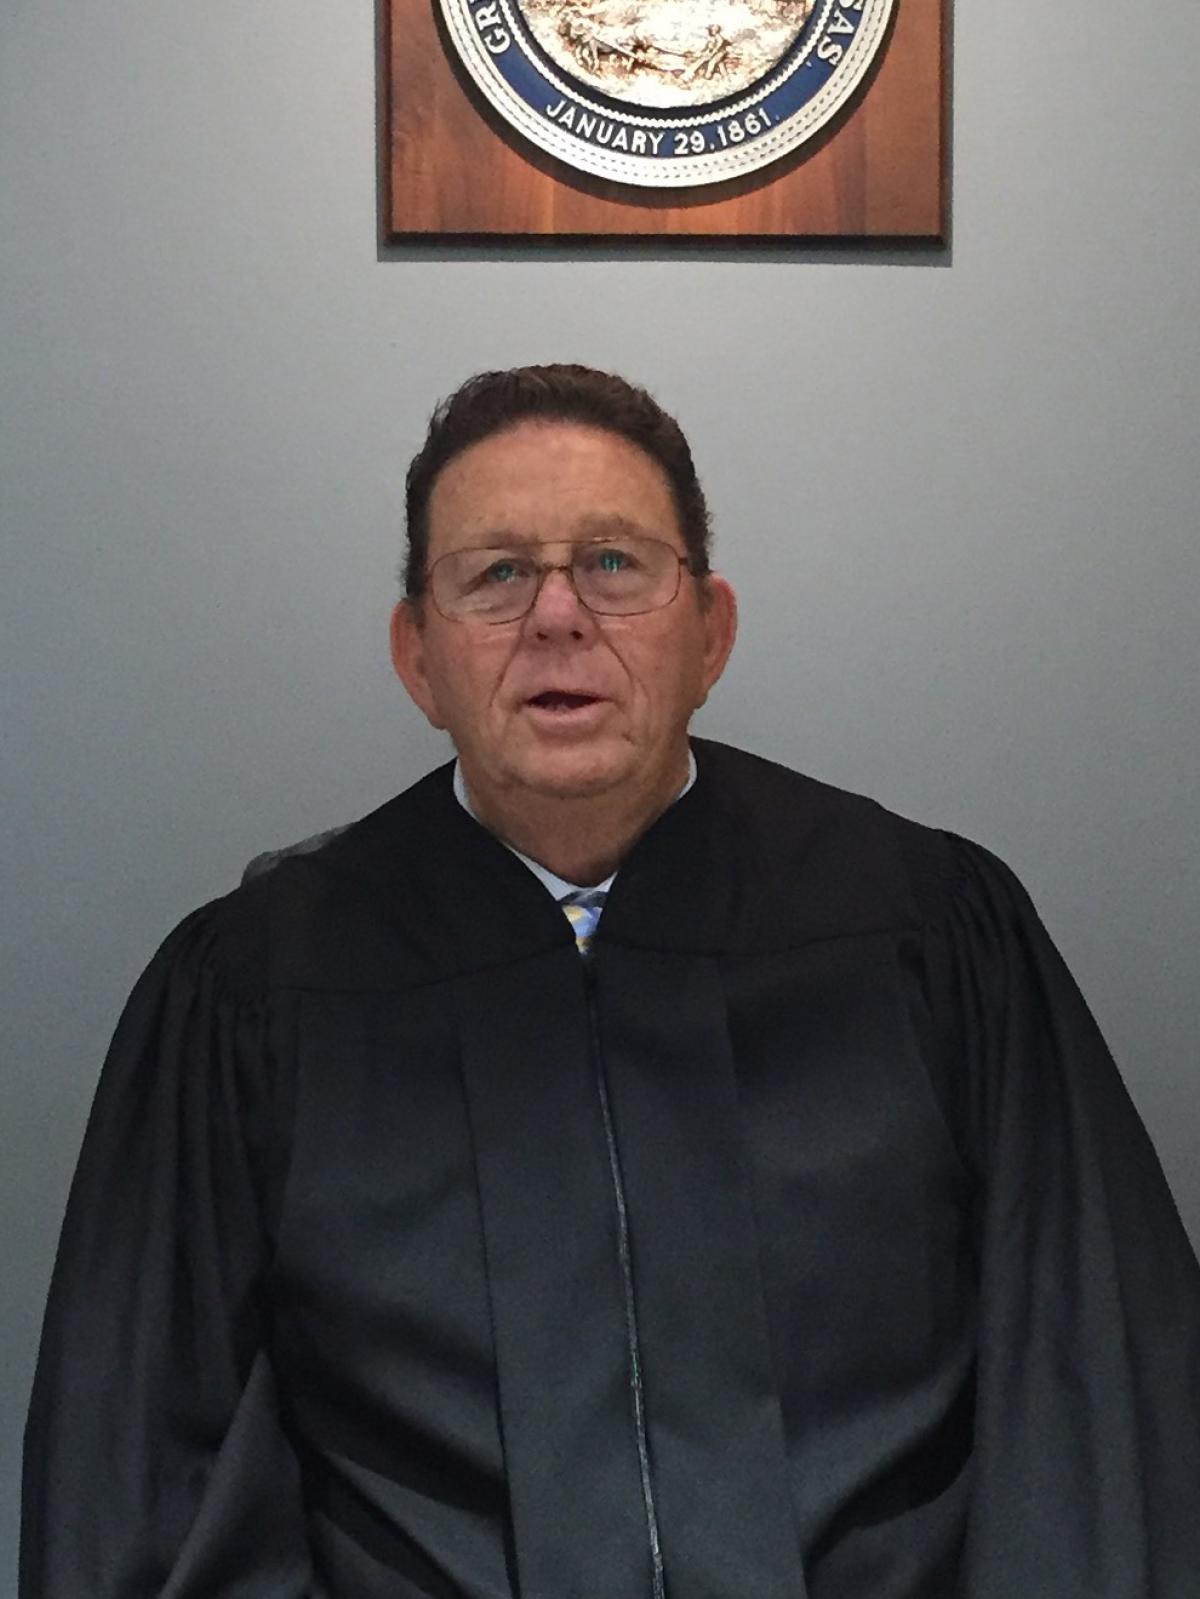 District Magistrate Judge Steven Santala retiring October 6